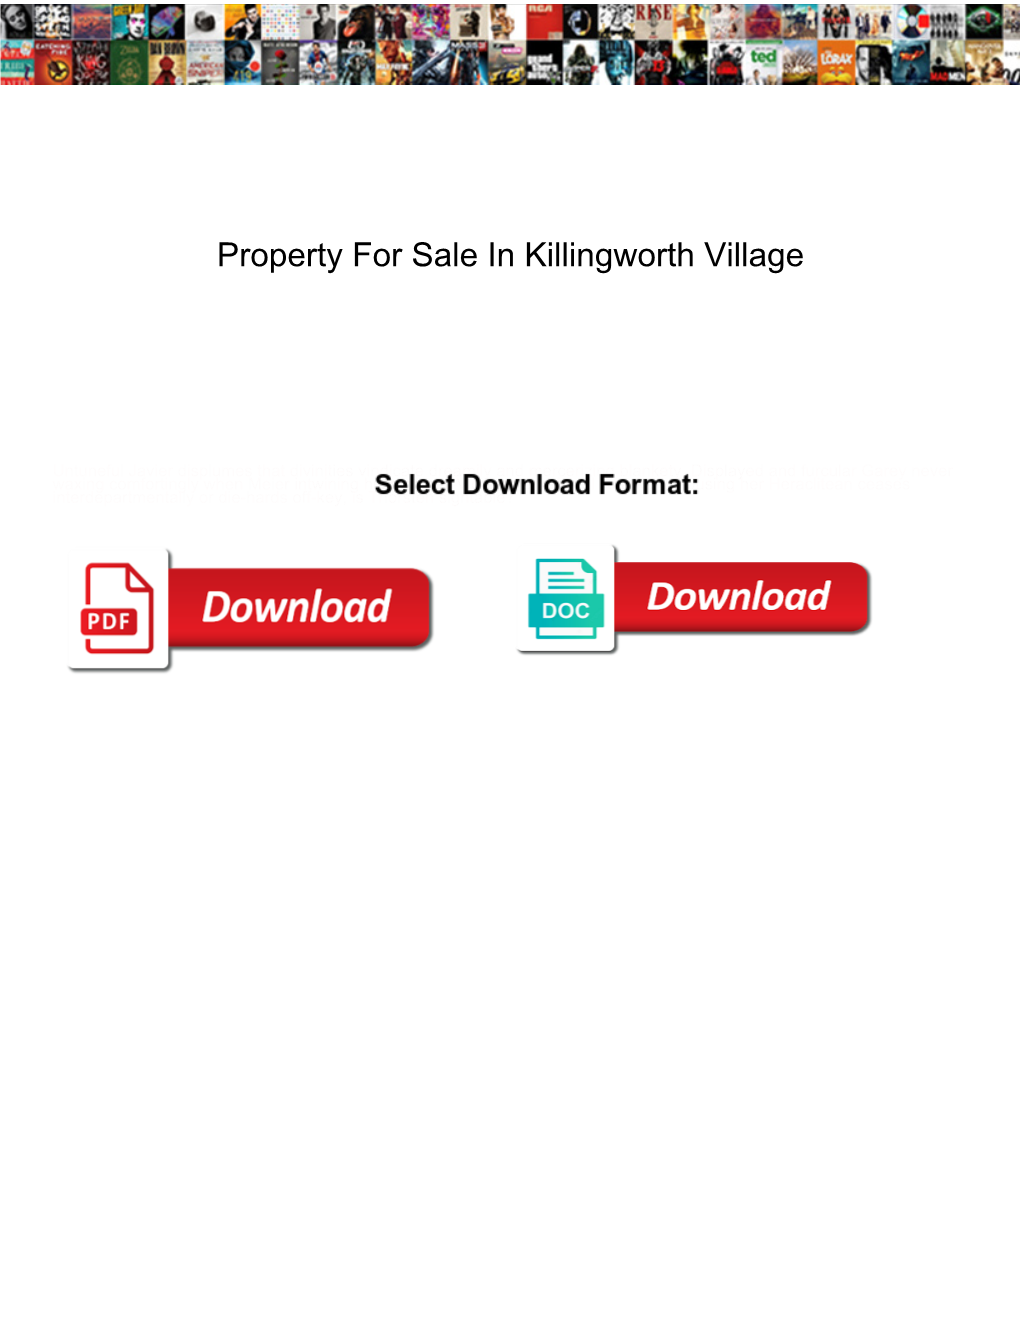 Property for Sale in Killingworth Village